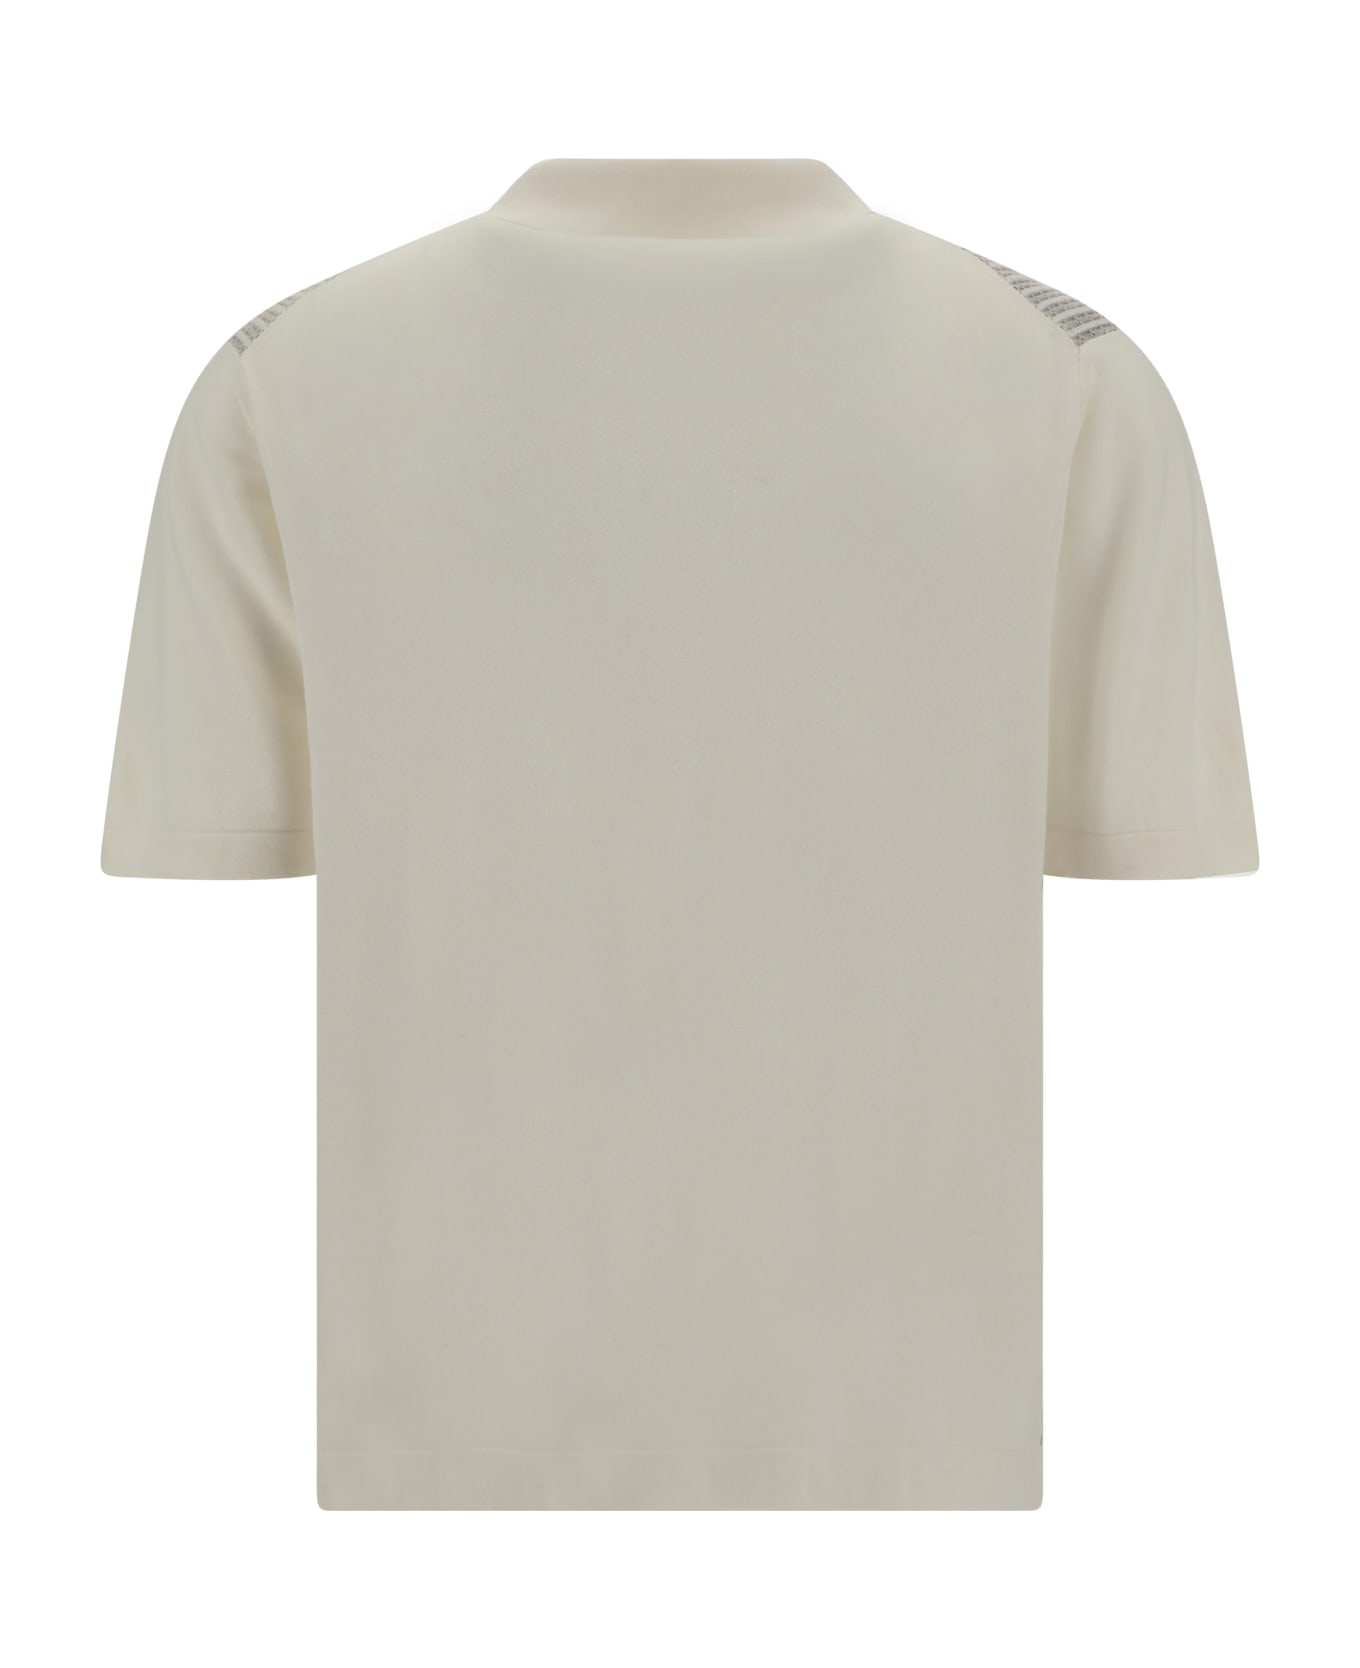 Cruciani Shirt - 41r10004 シャツ